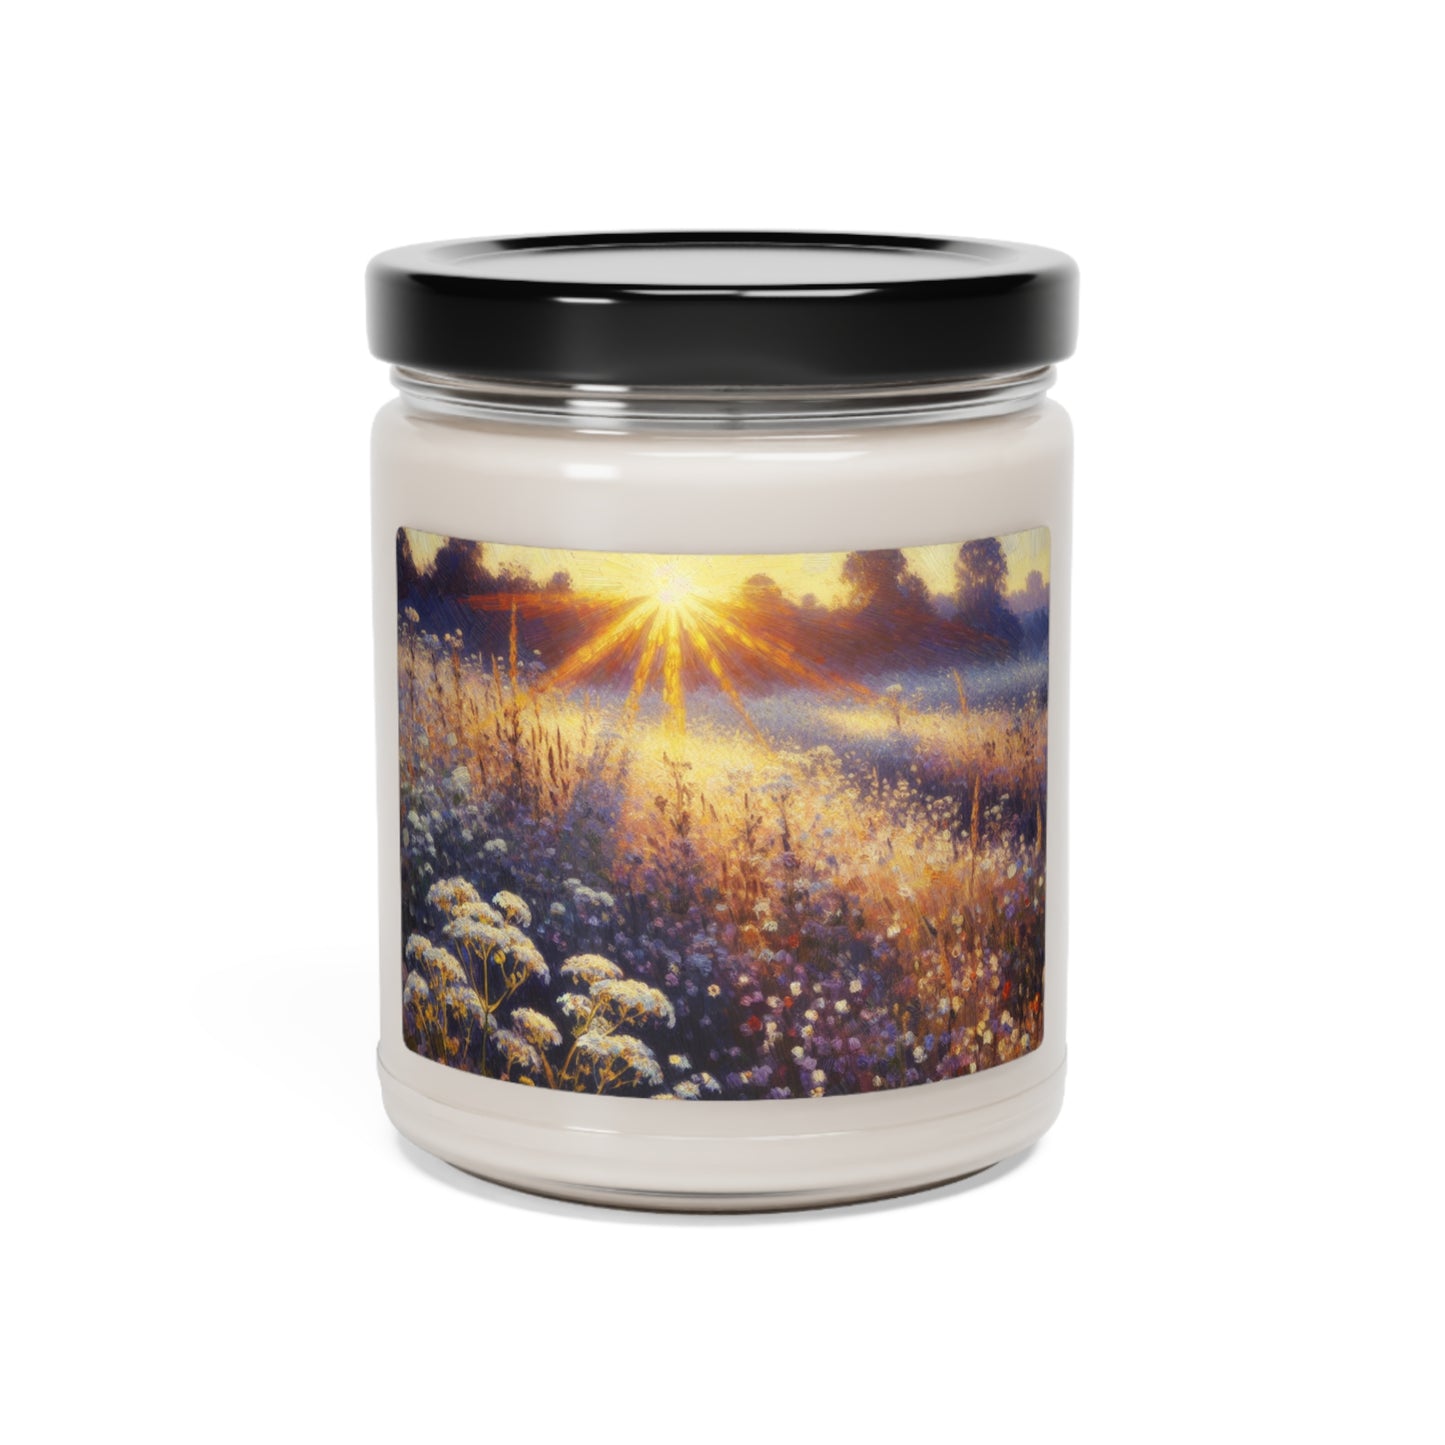 "Wildflower Sunrise" - Vela de soja con aroma a alienígena, 9 oz, estilo impresionista